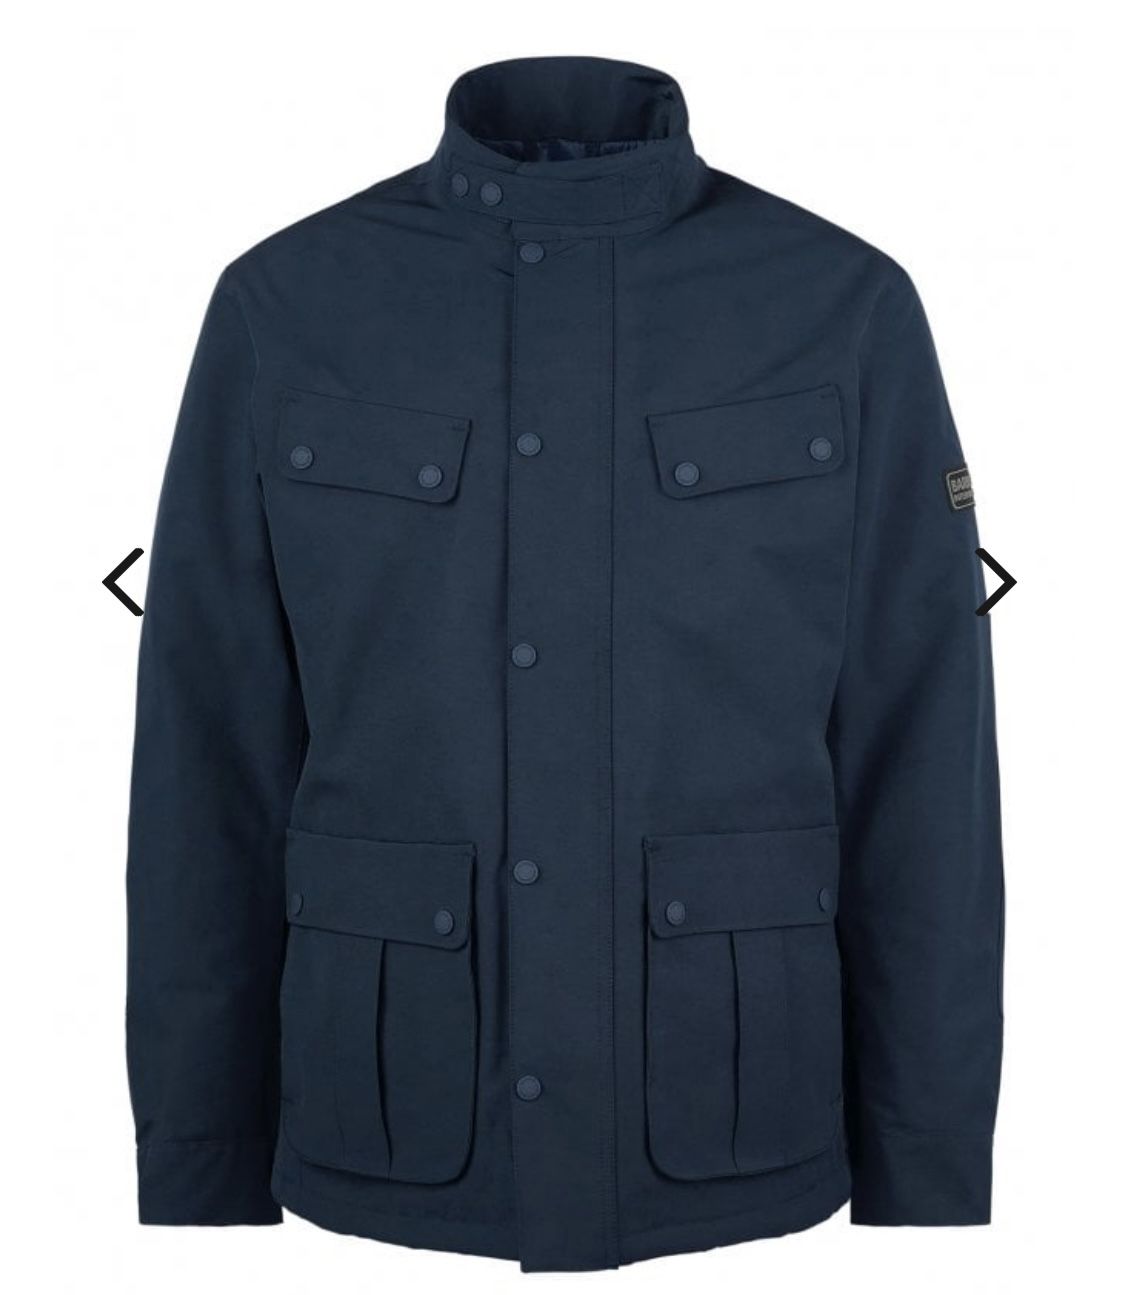 Barbour International - Waterproof Duke Jacket - Size medium